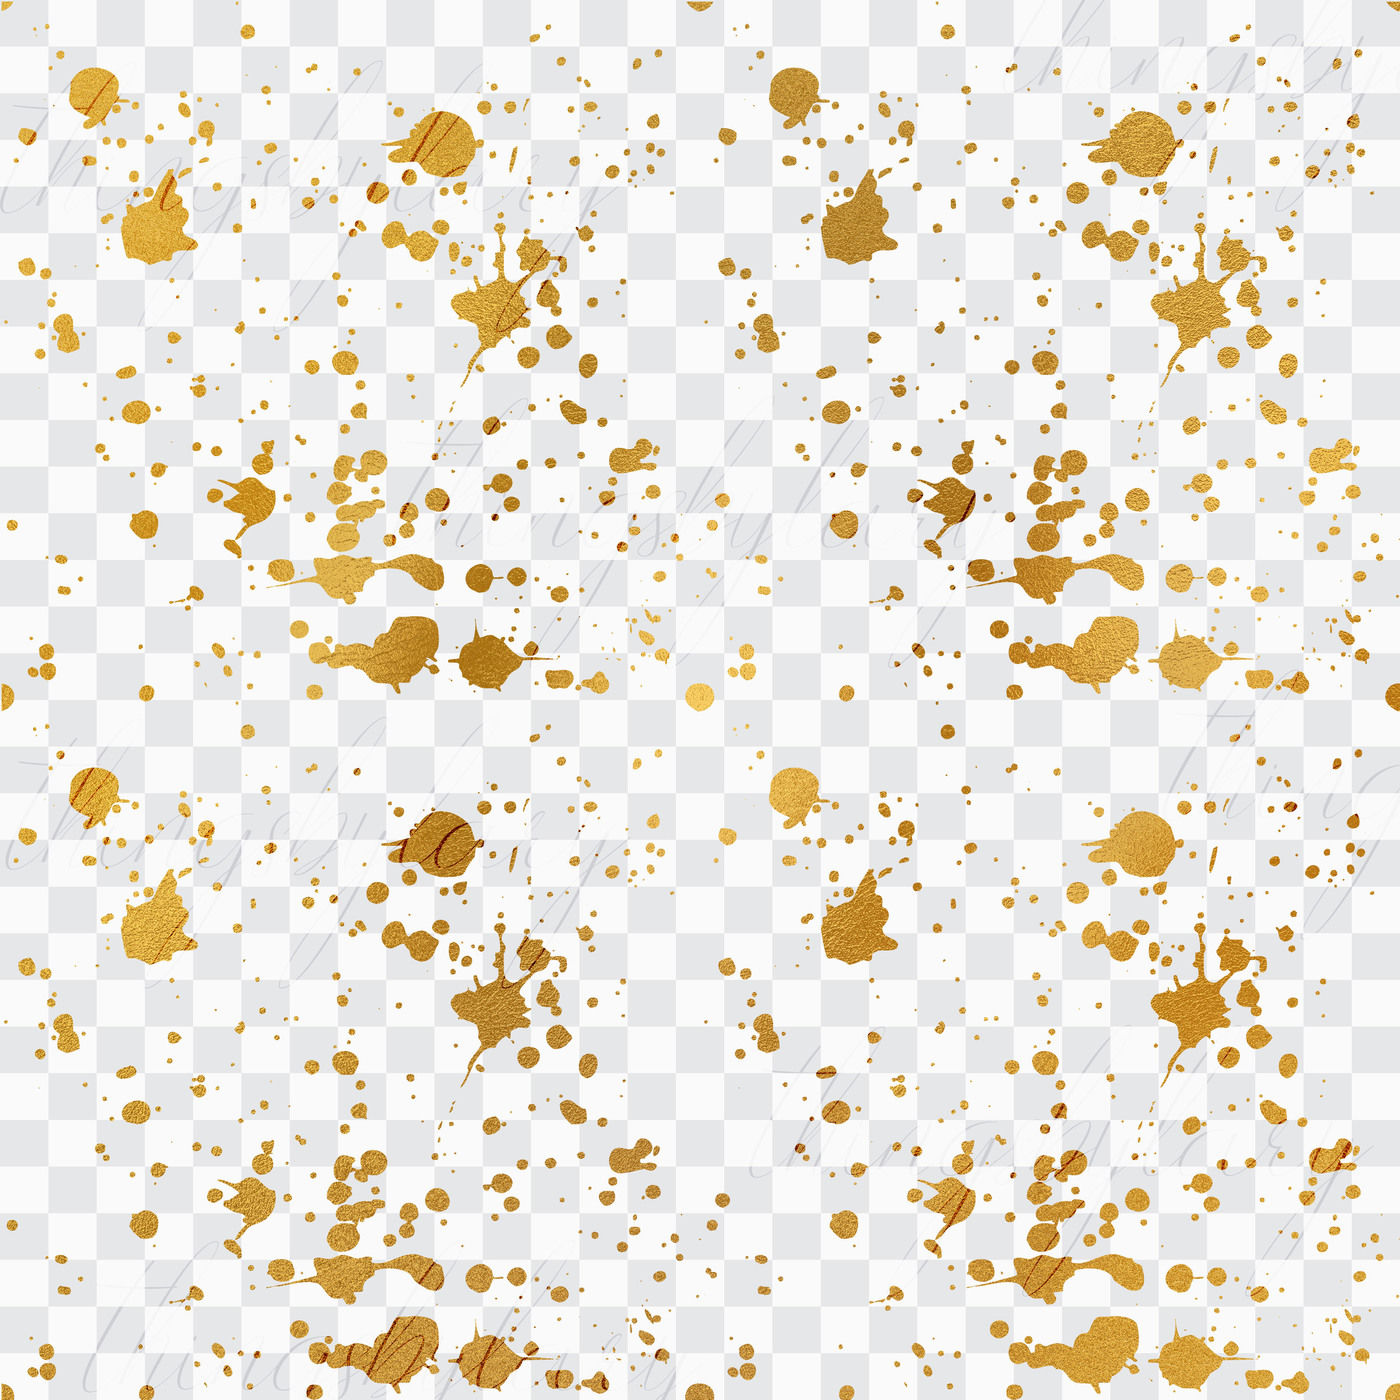 14 Seamless Gold Paint Splatter Overlay Images By ArtInsider